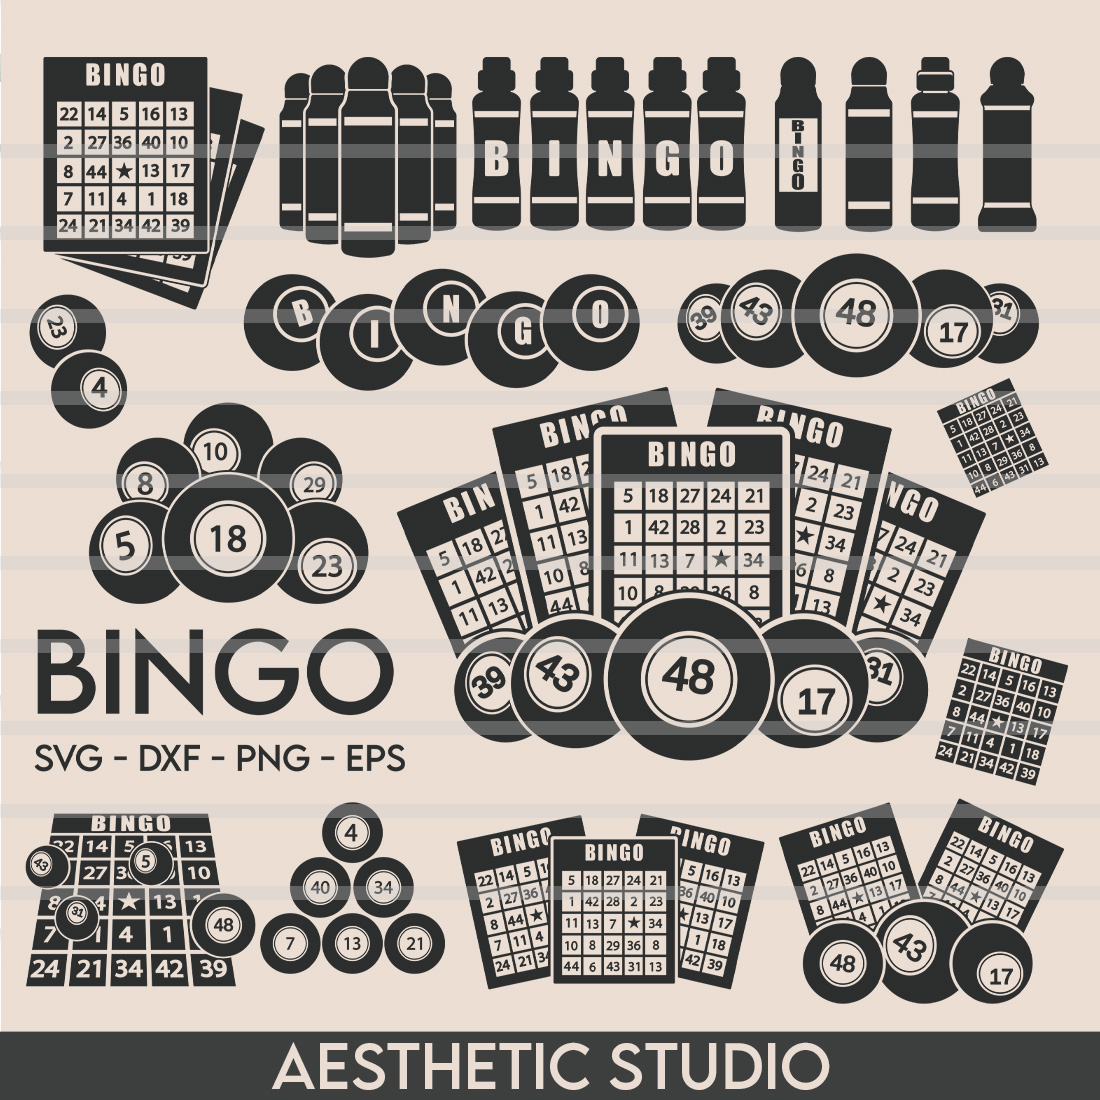 Bingo SVG, Bingo Cards Svg, Bingo, Bingo Daubers Svg, Bingo Balls Svg, Game Svg, Silhouette, Bingo Vector, Dxf, Png, Eps, Cut file Silhouette, Vector, Outline, Cut file cover image.